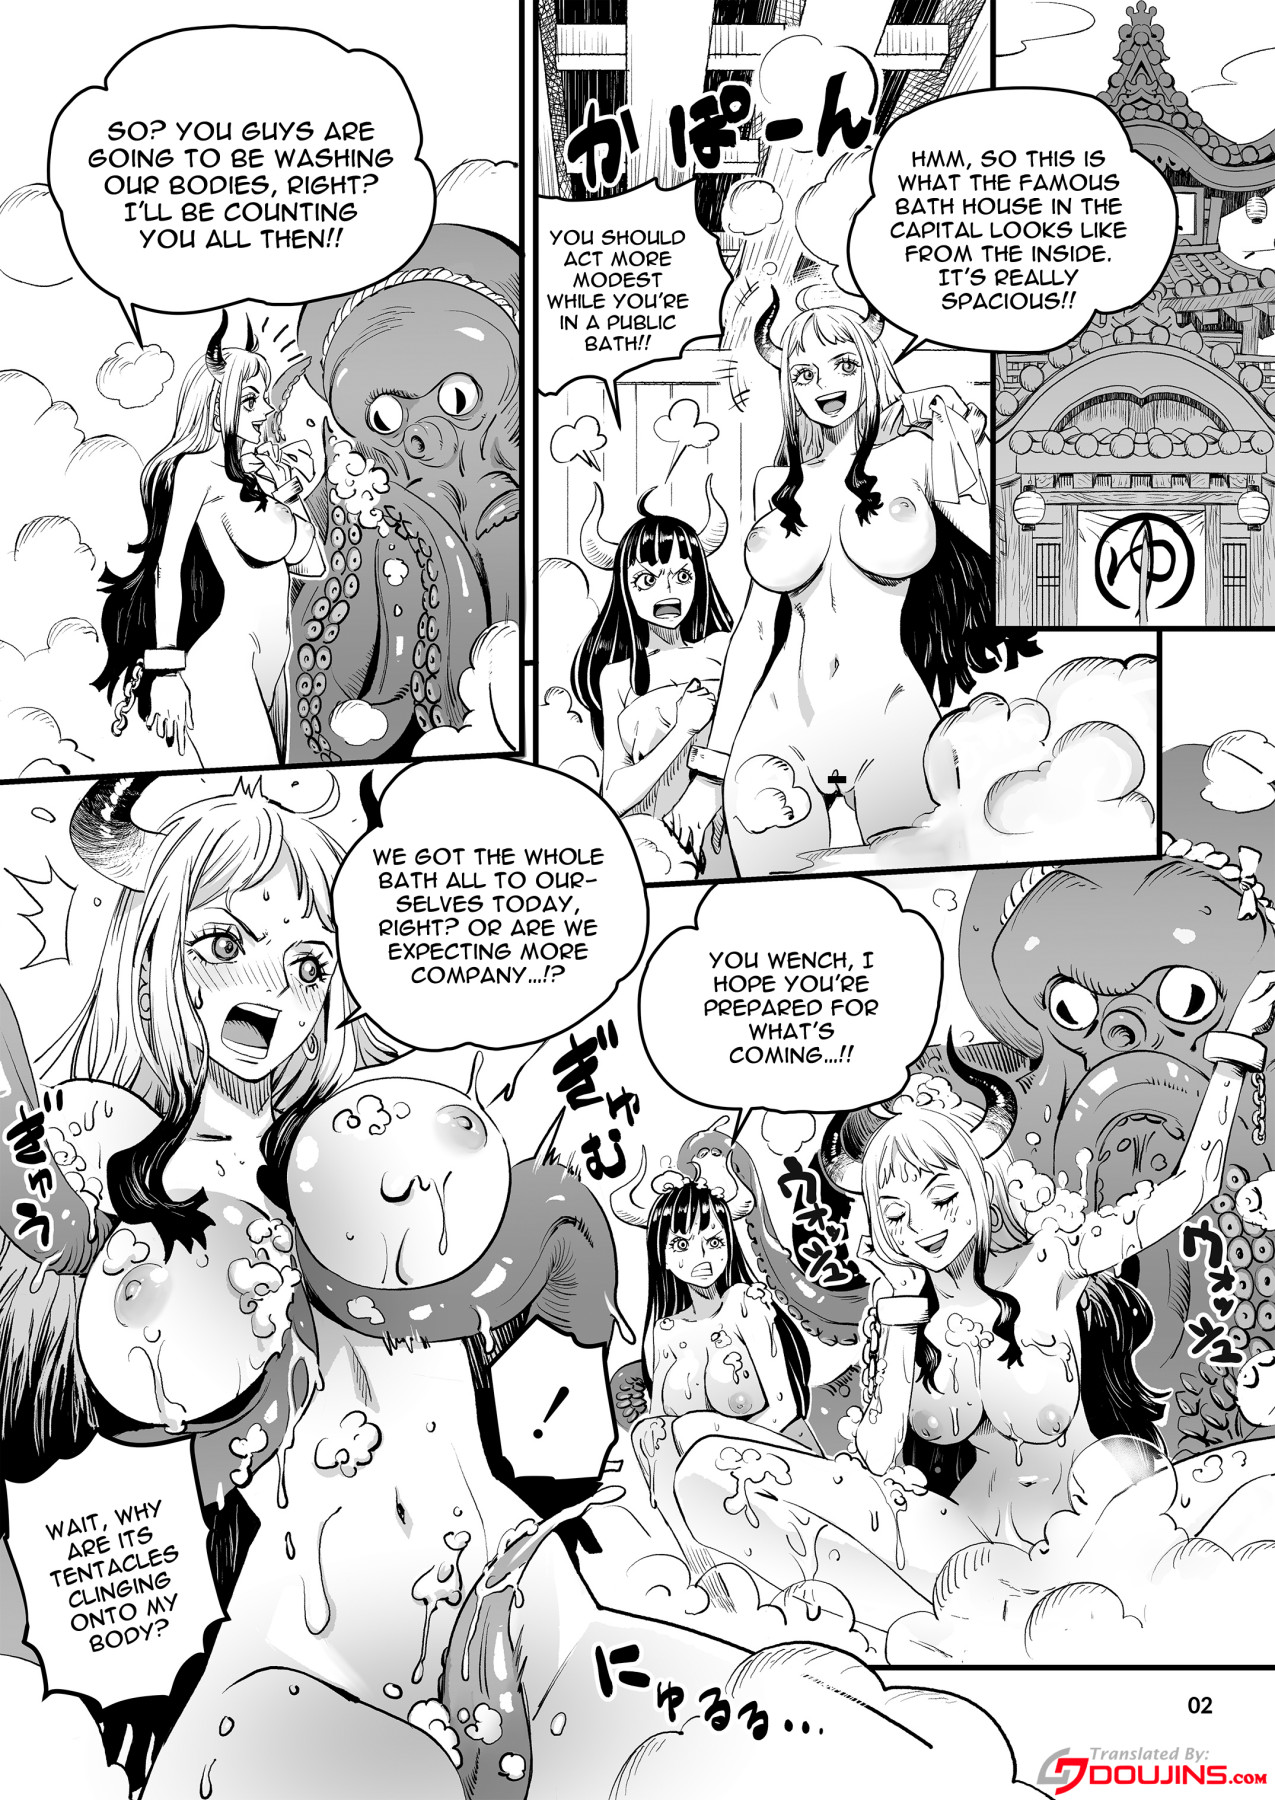 Hentai Manga Comic-v22m-Washing By Rubbing In The Wano Bathhouse-Read-2